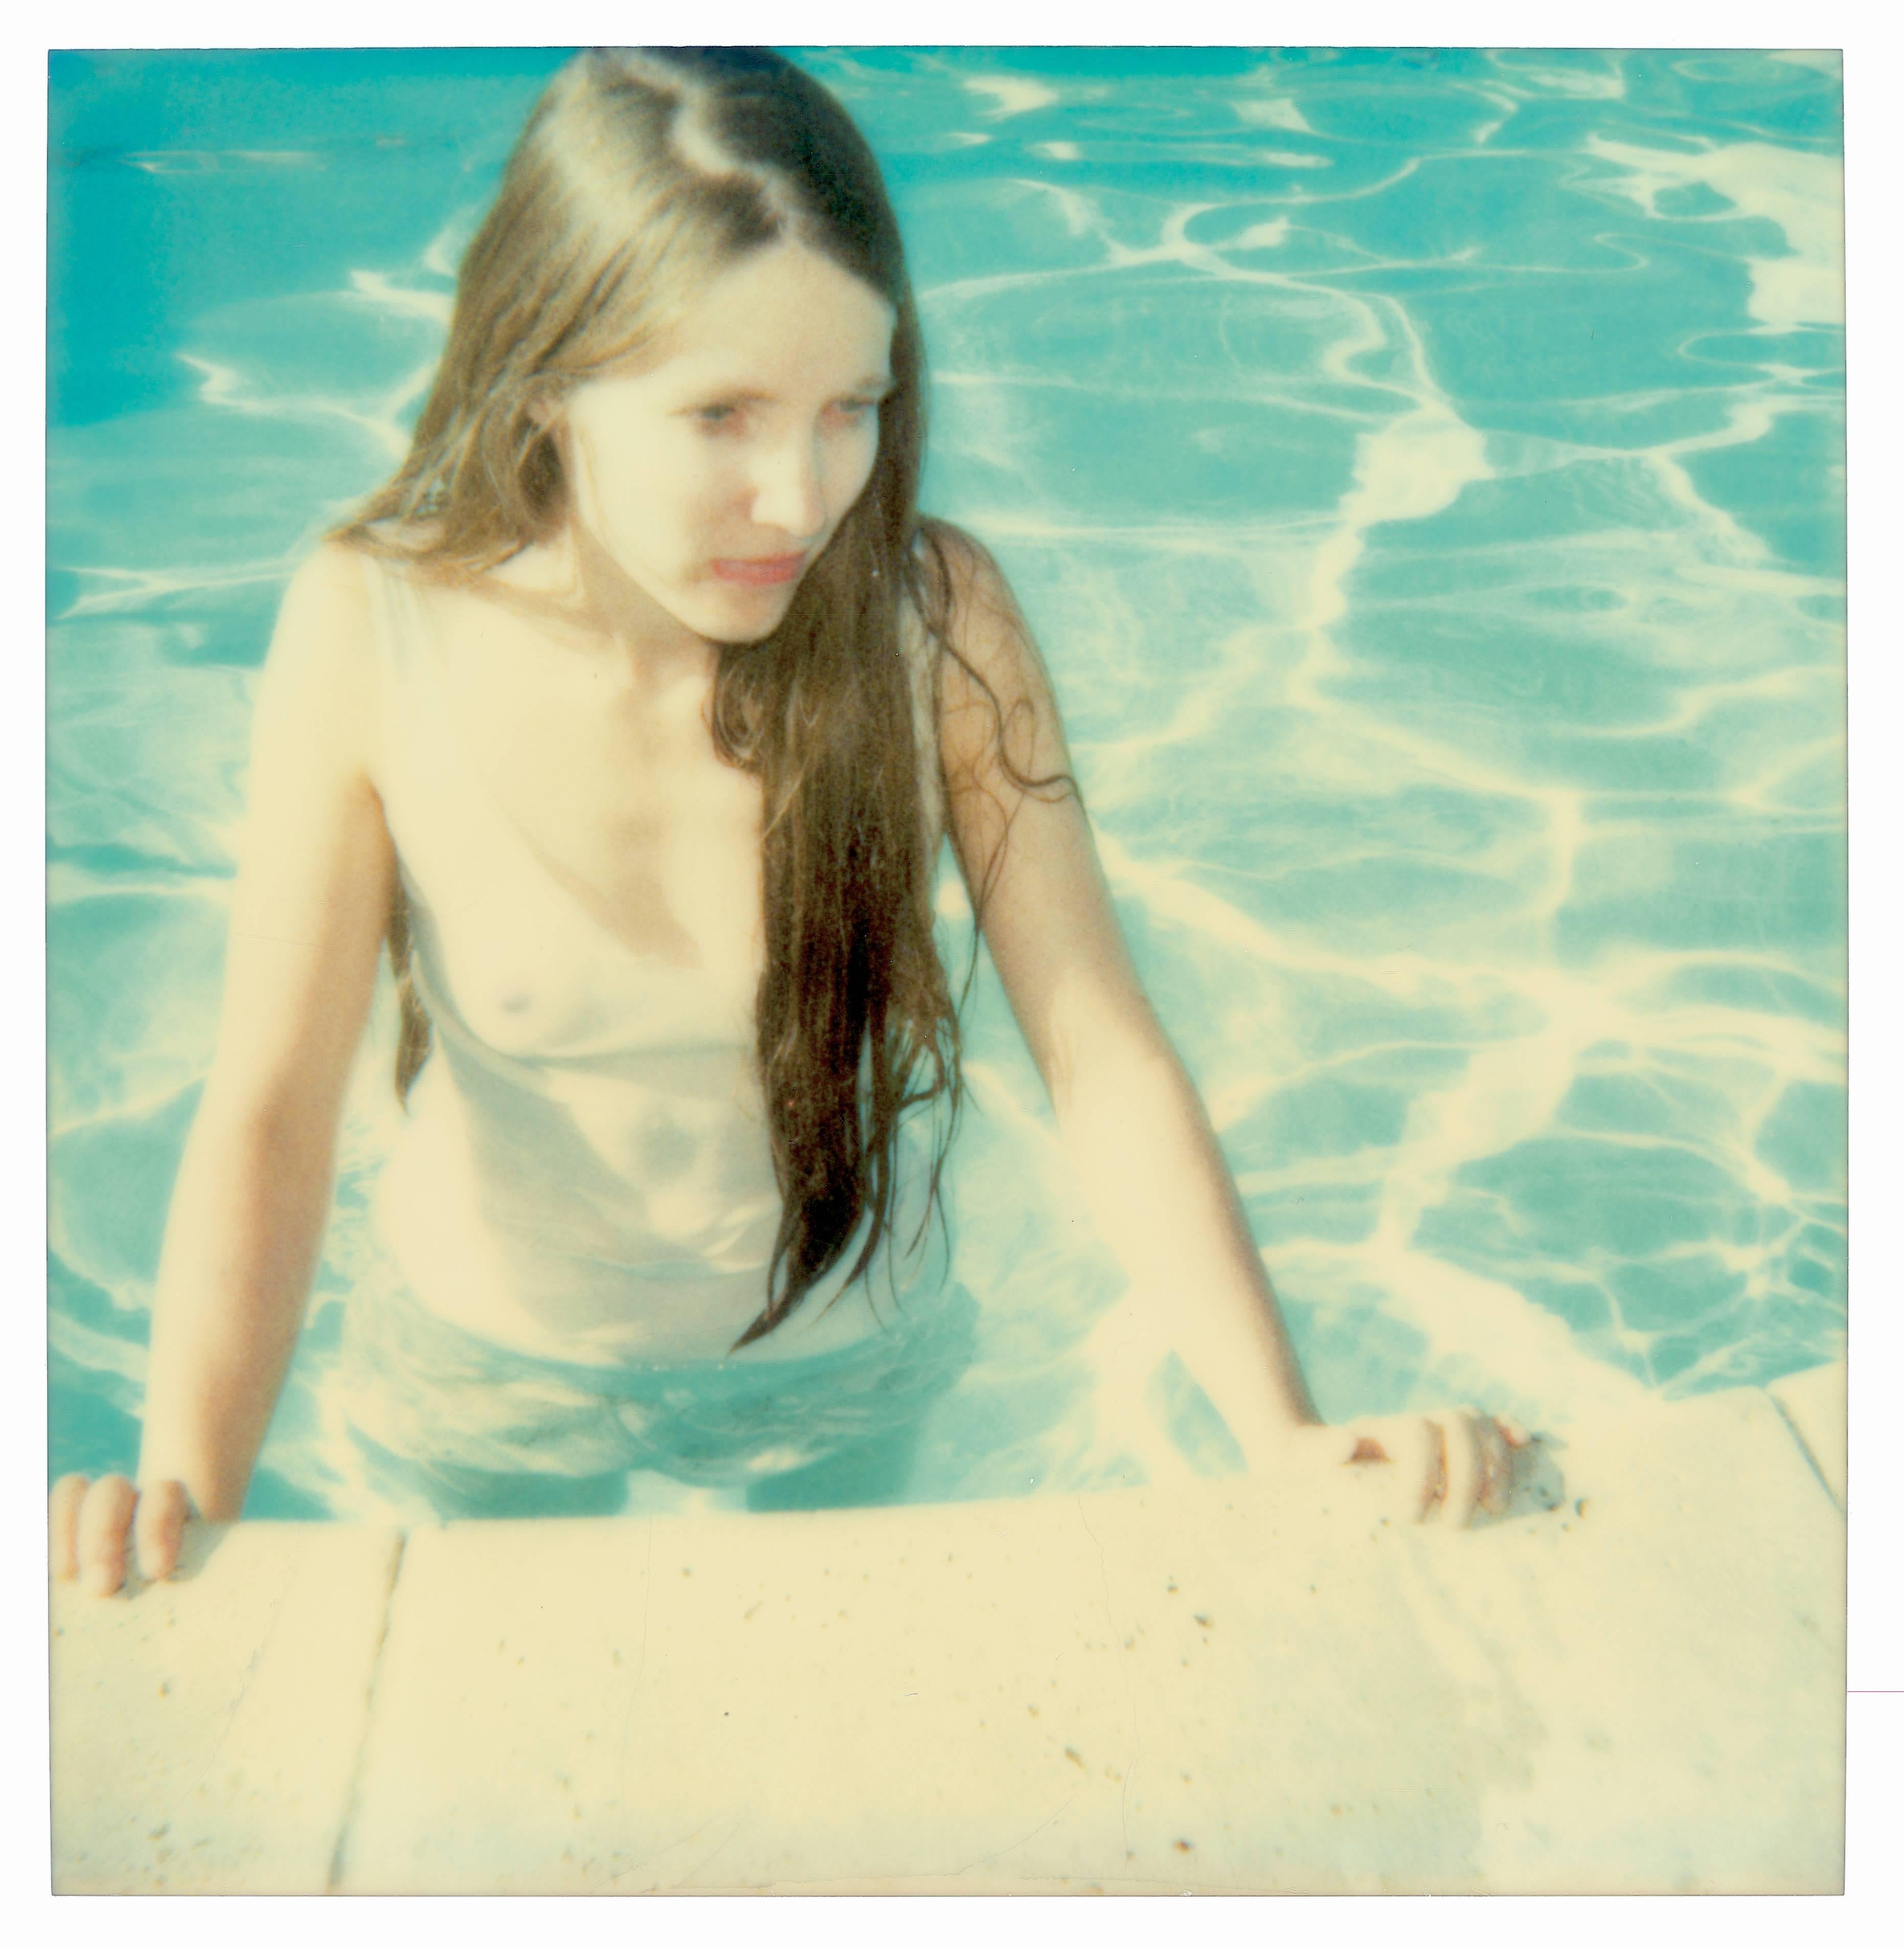 Stefanie Schneider Portrait Photograph - Pool Side - 29 Palms, CA